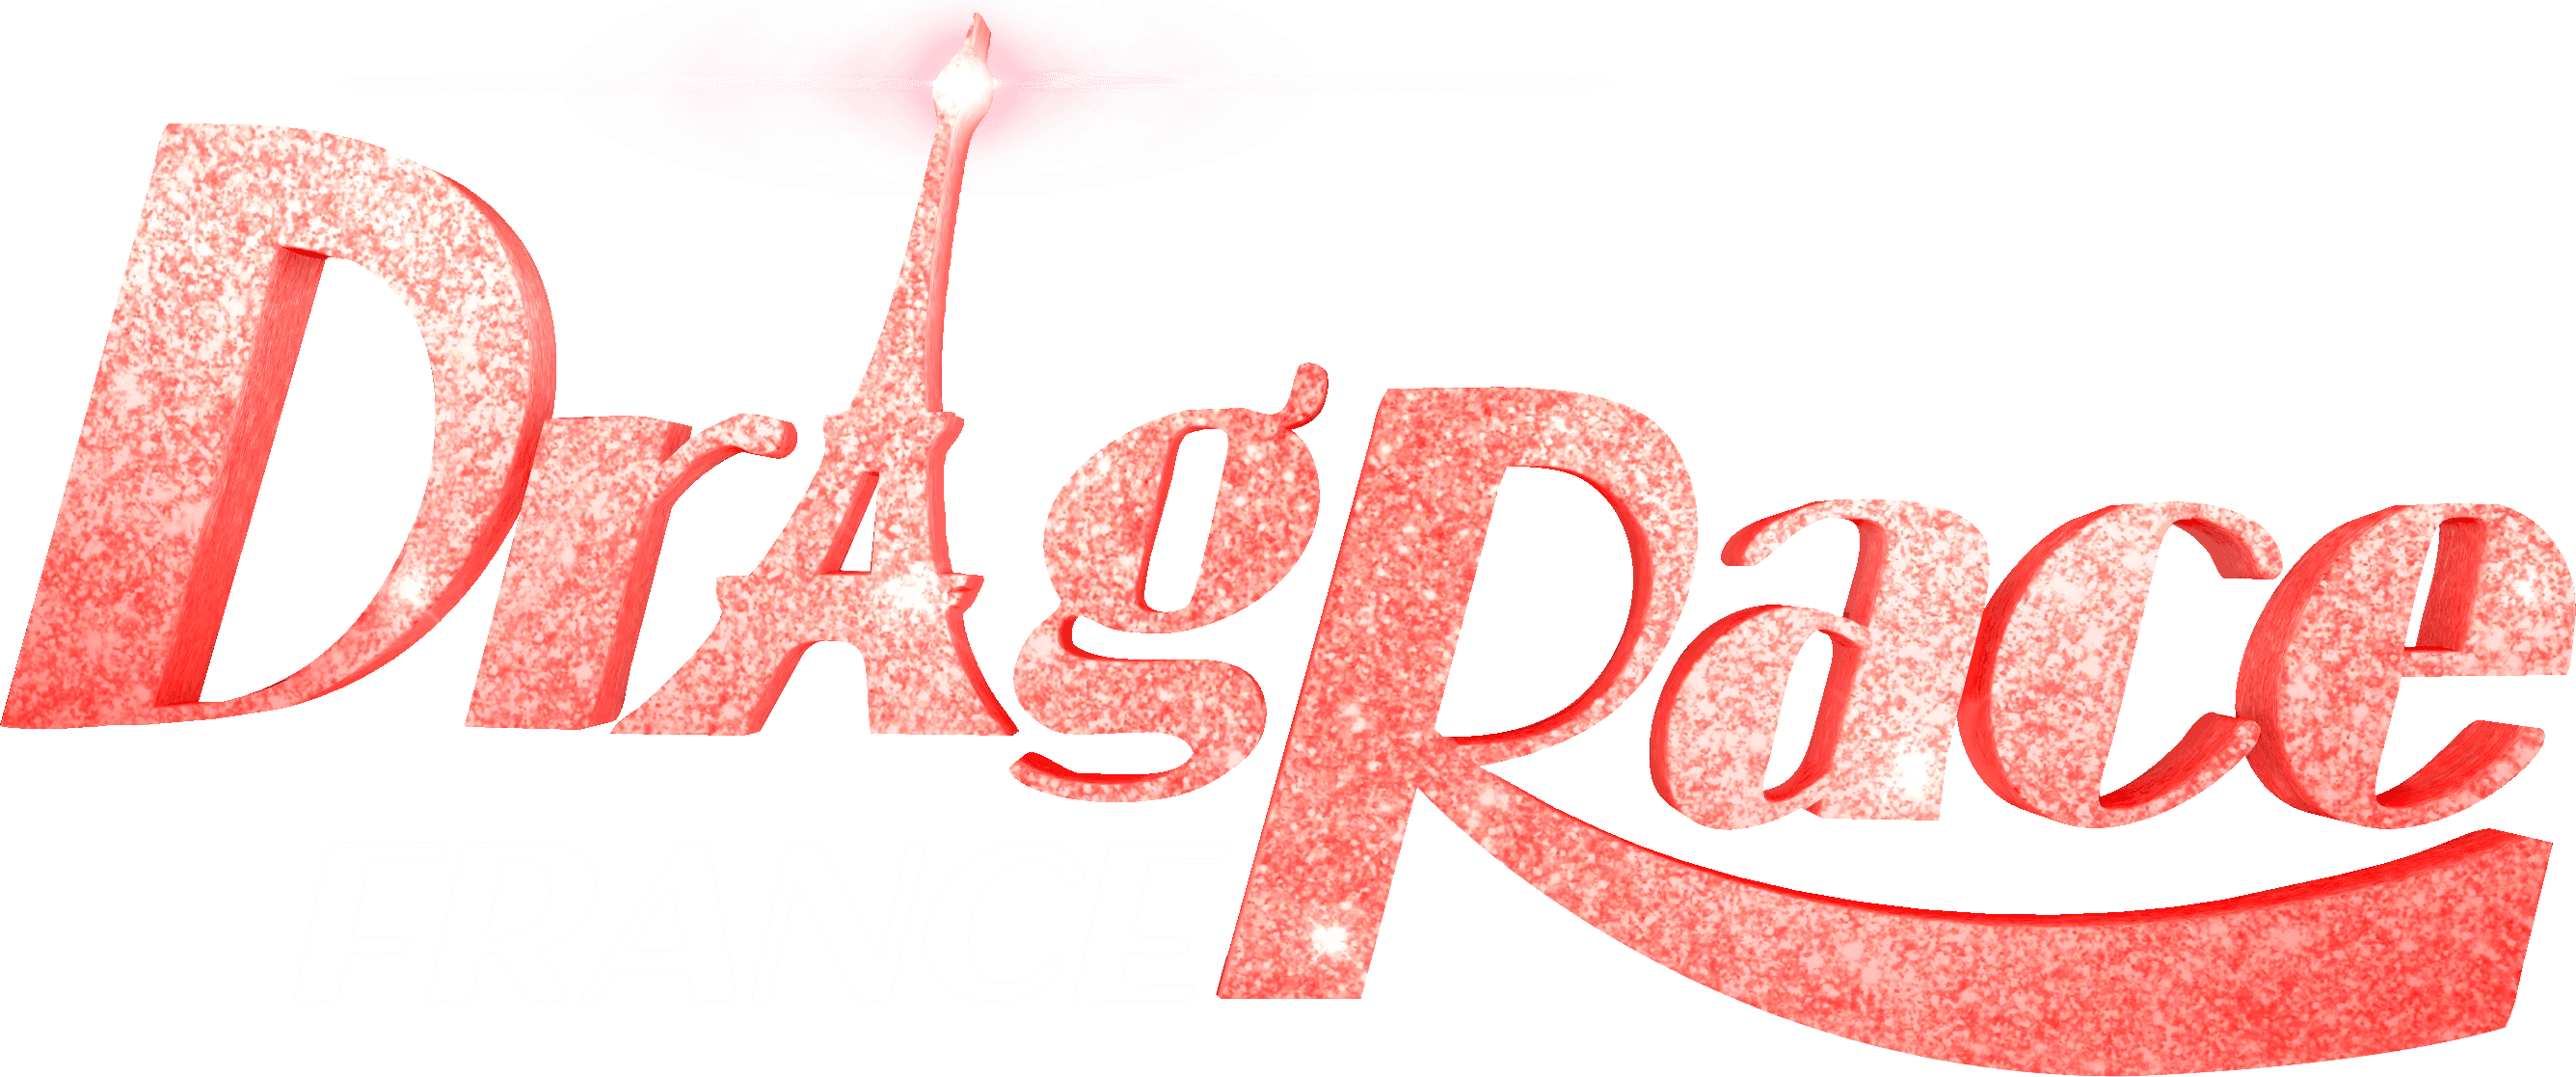 Drag Race France logo